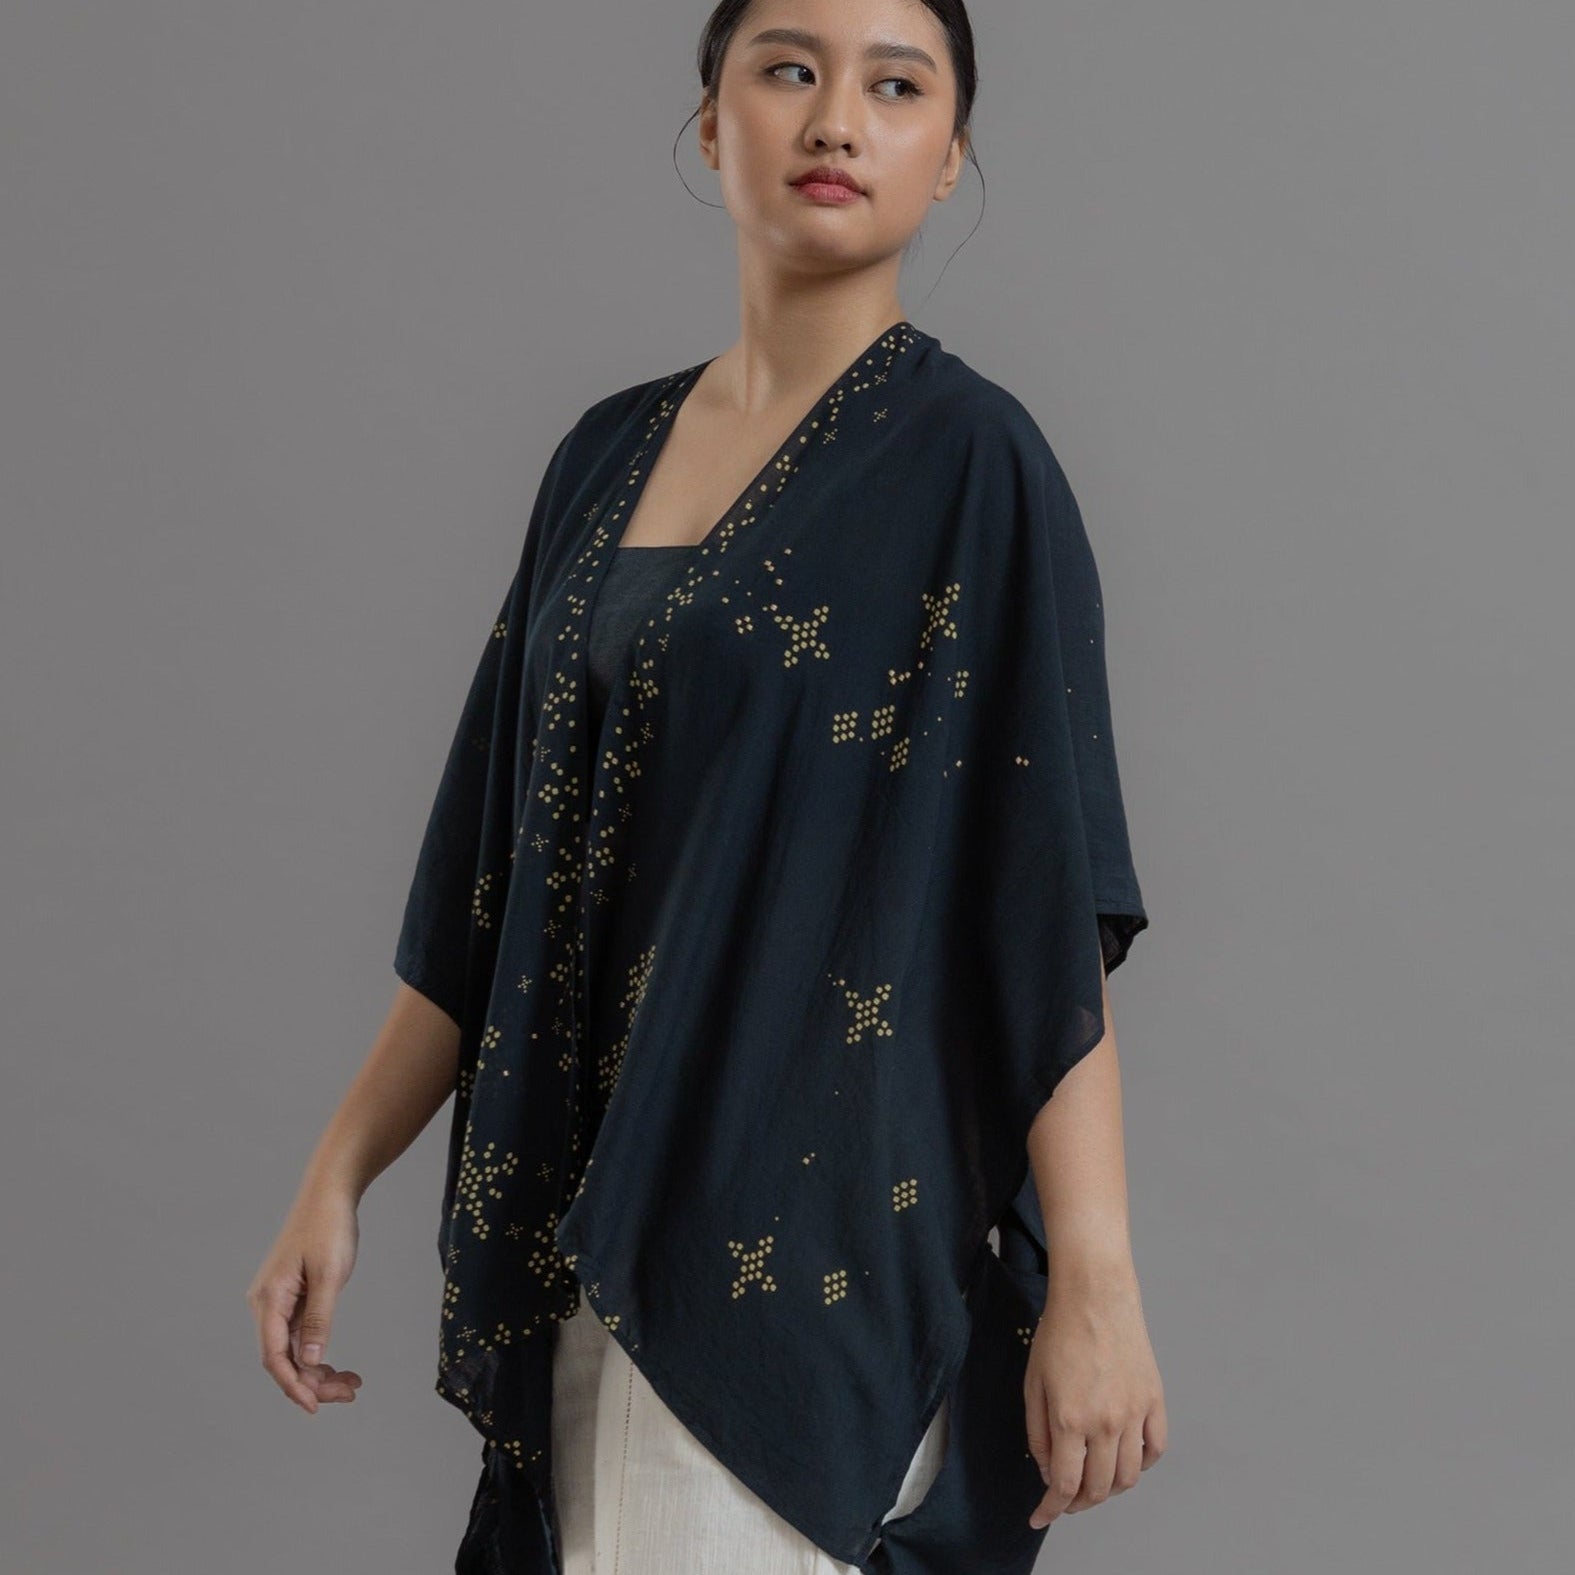 throw, women's clothing, batik, outer, outerwear